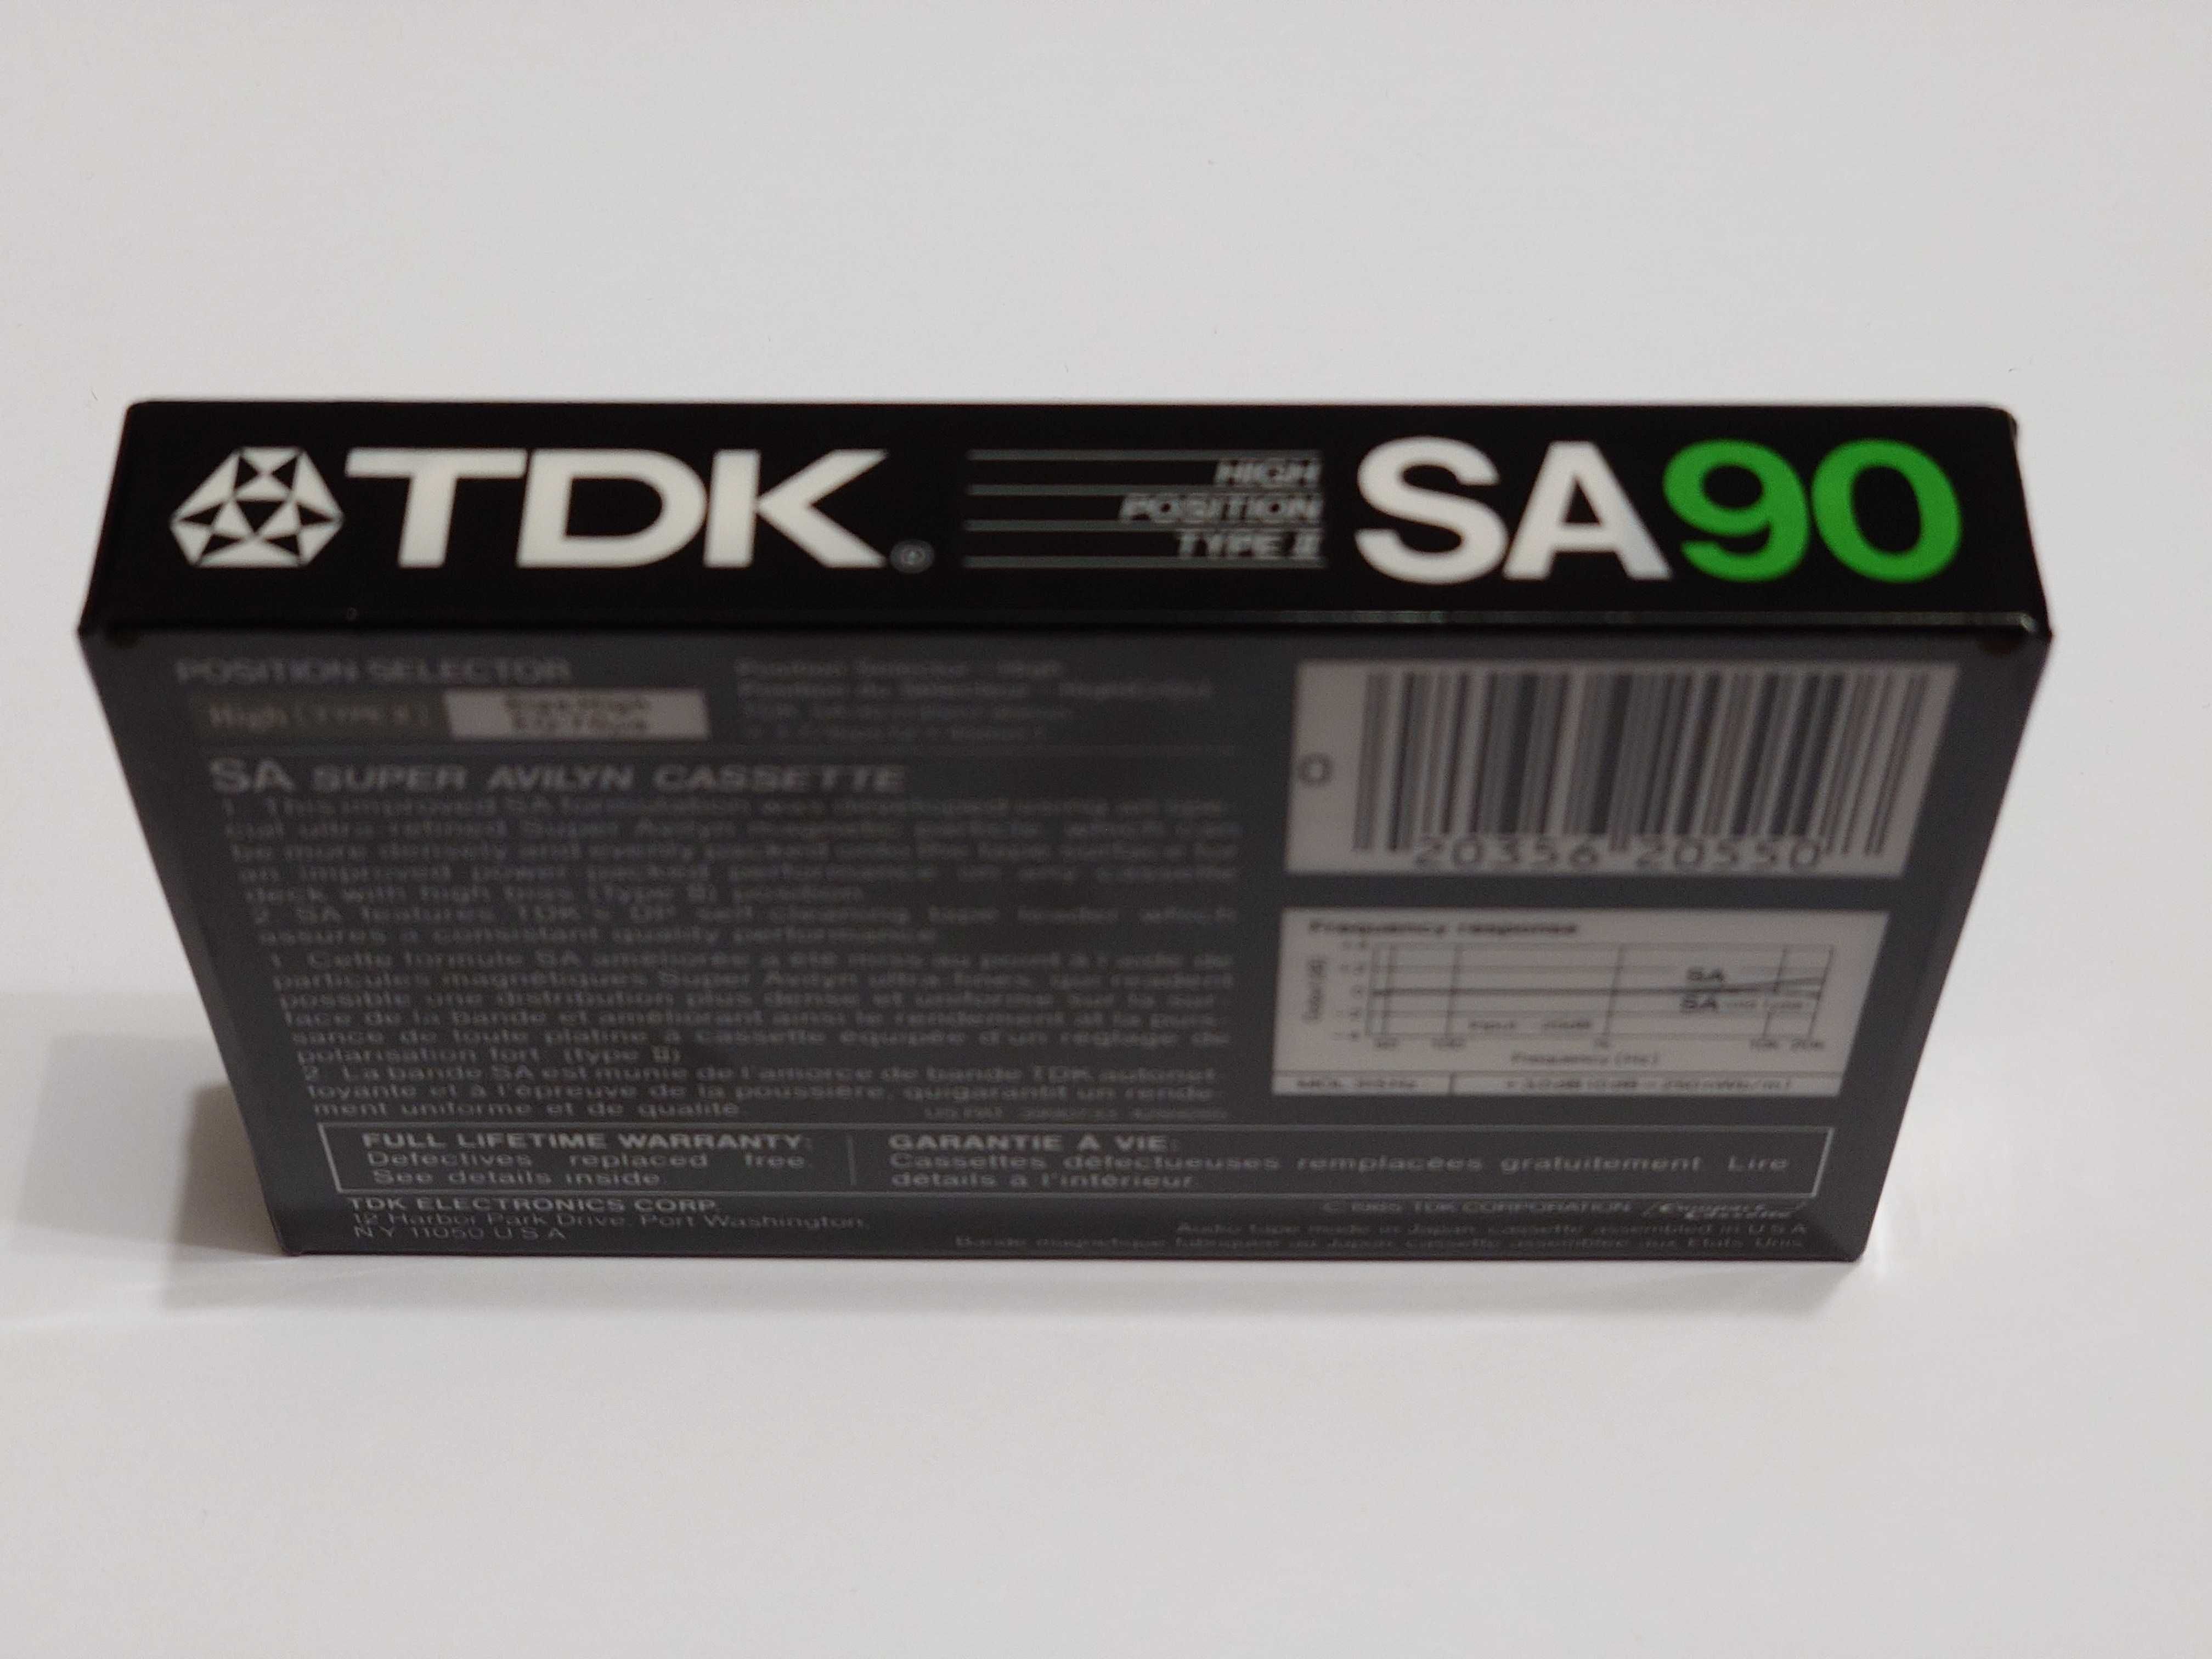 TDK SA 90 model na lata 1985/1986 rynek Amerykański